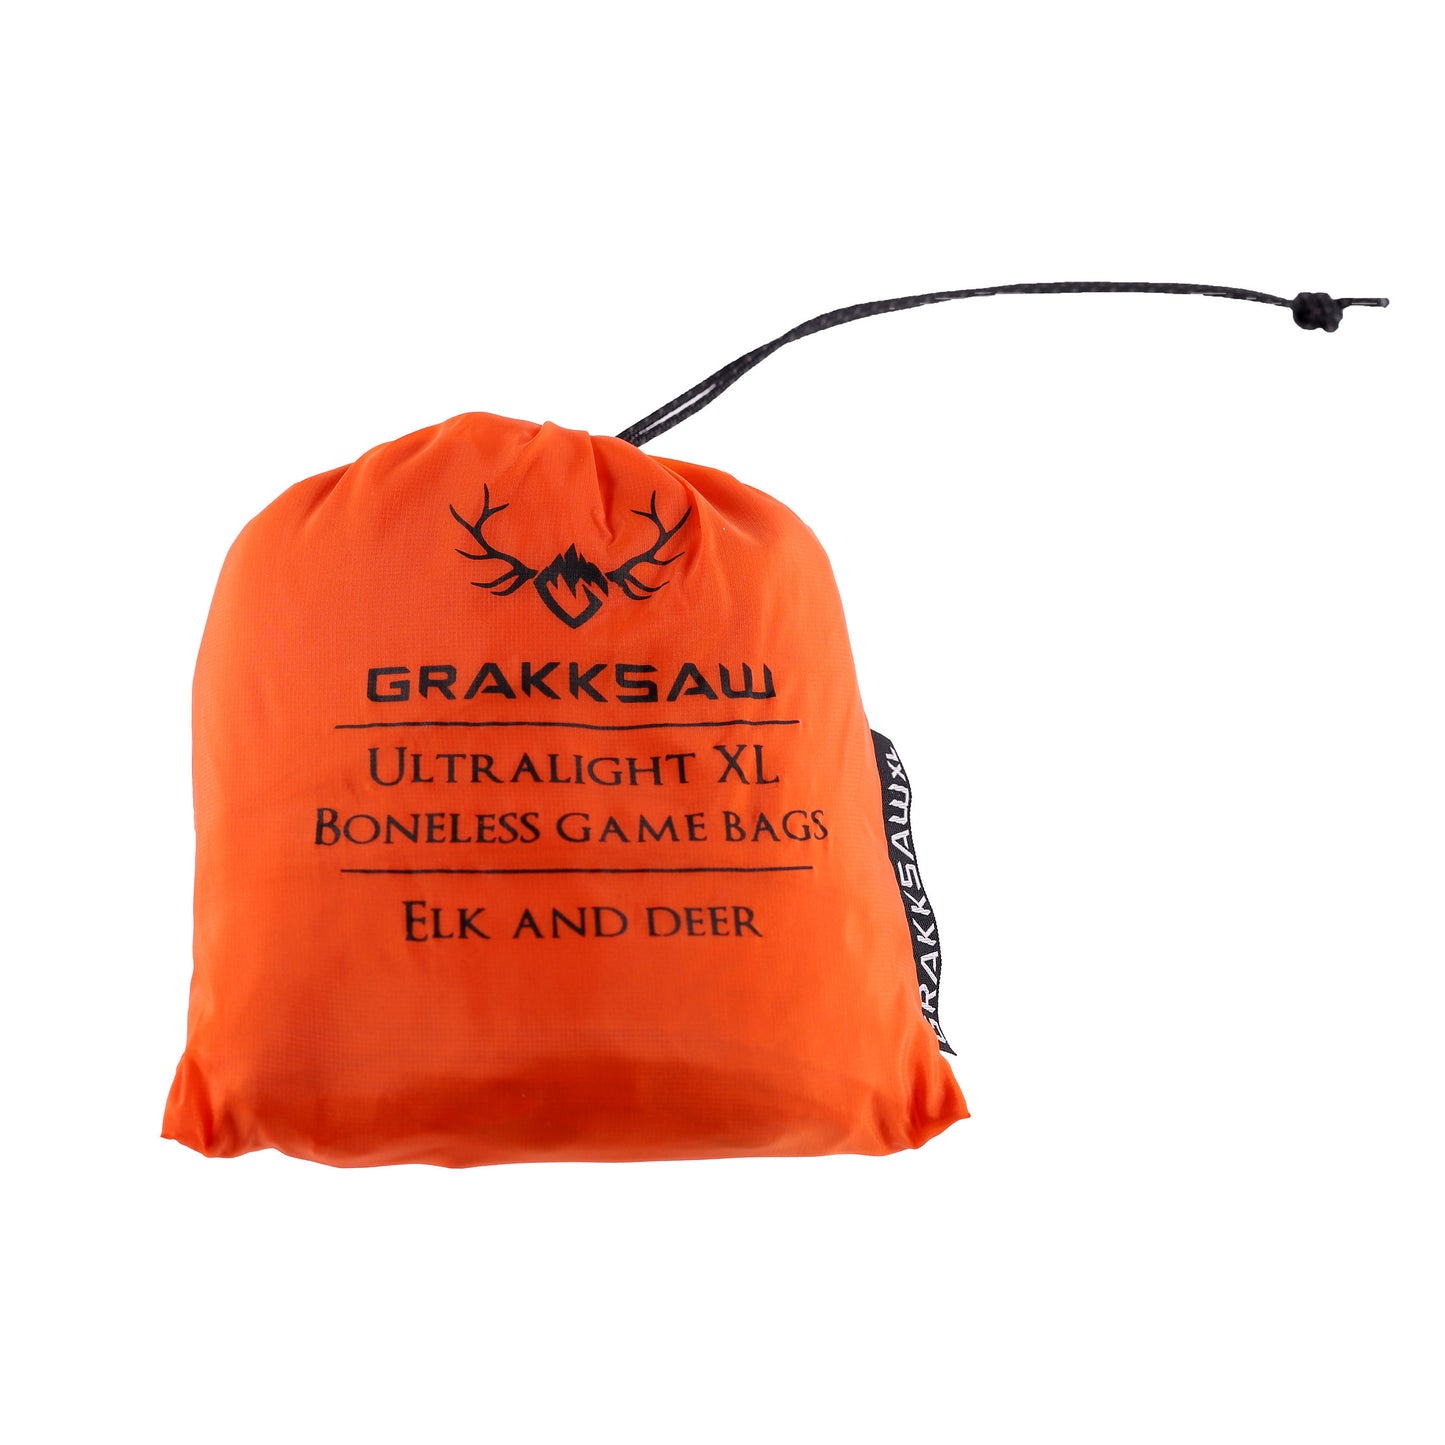 Grakksaw Ultralight XL Game Bags